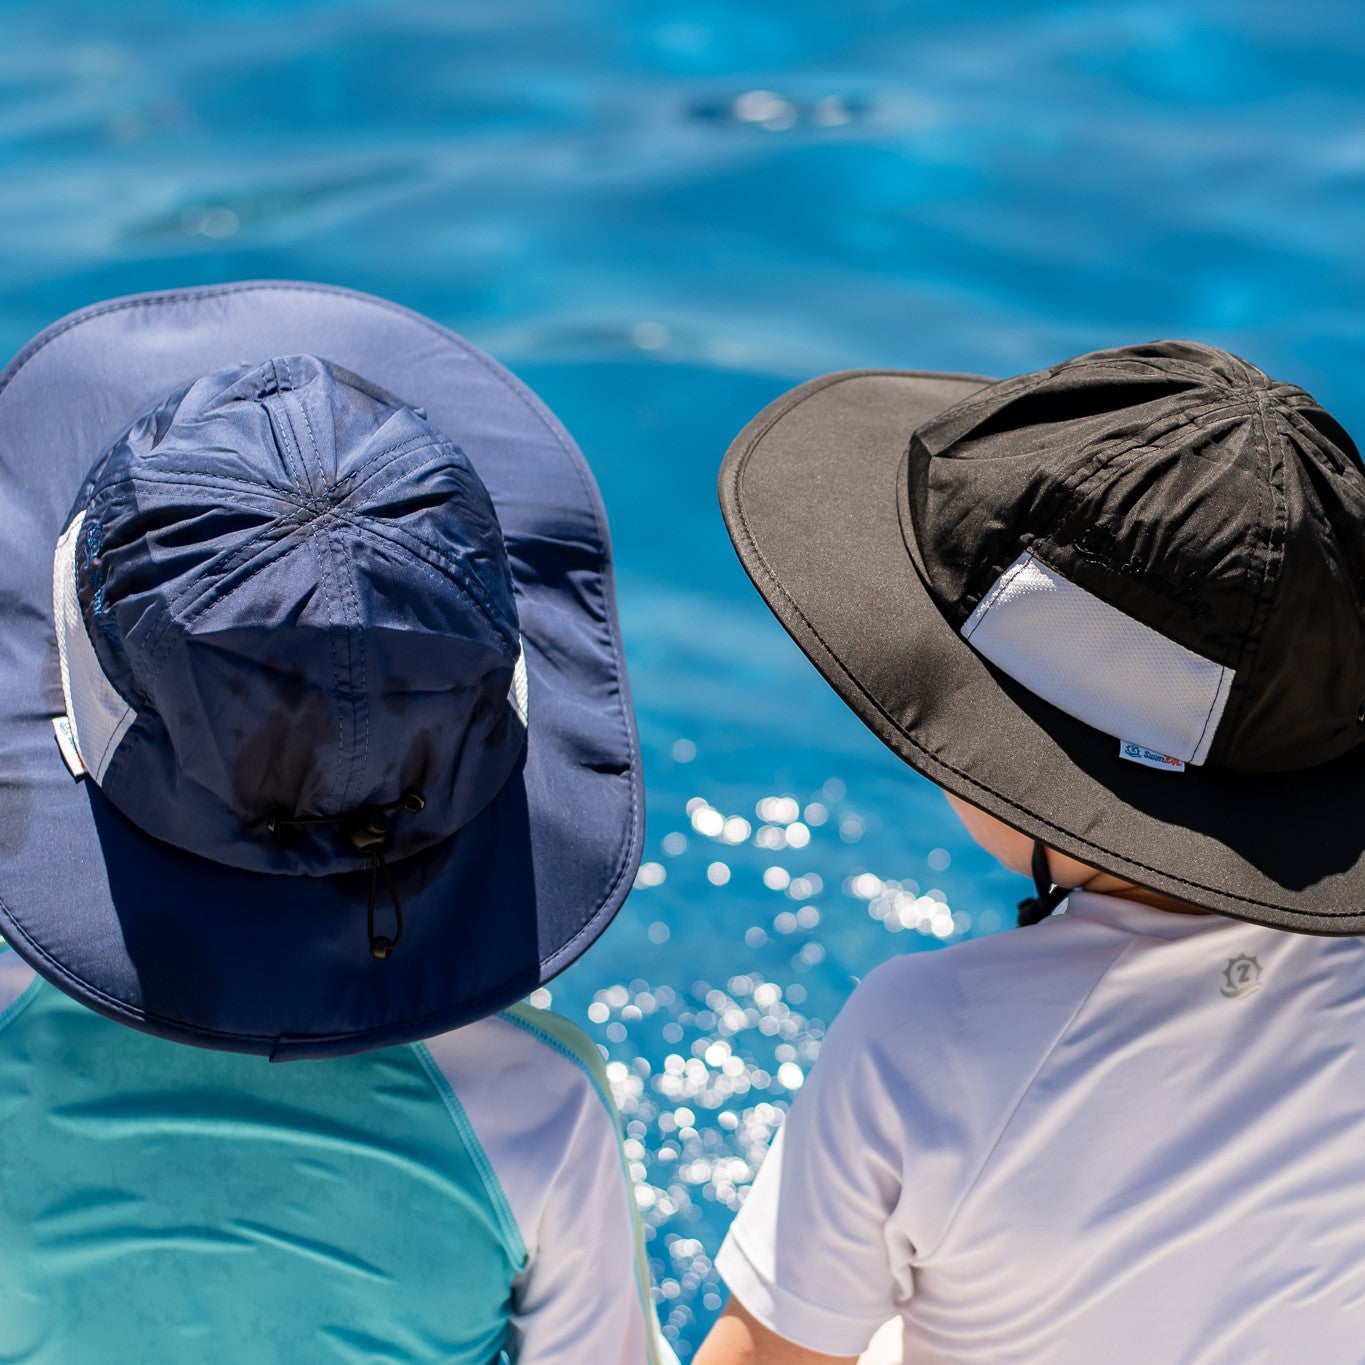 SwimZip Women's Wide Brim Sun Hat - Black - UPF 50+ Sun Protection